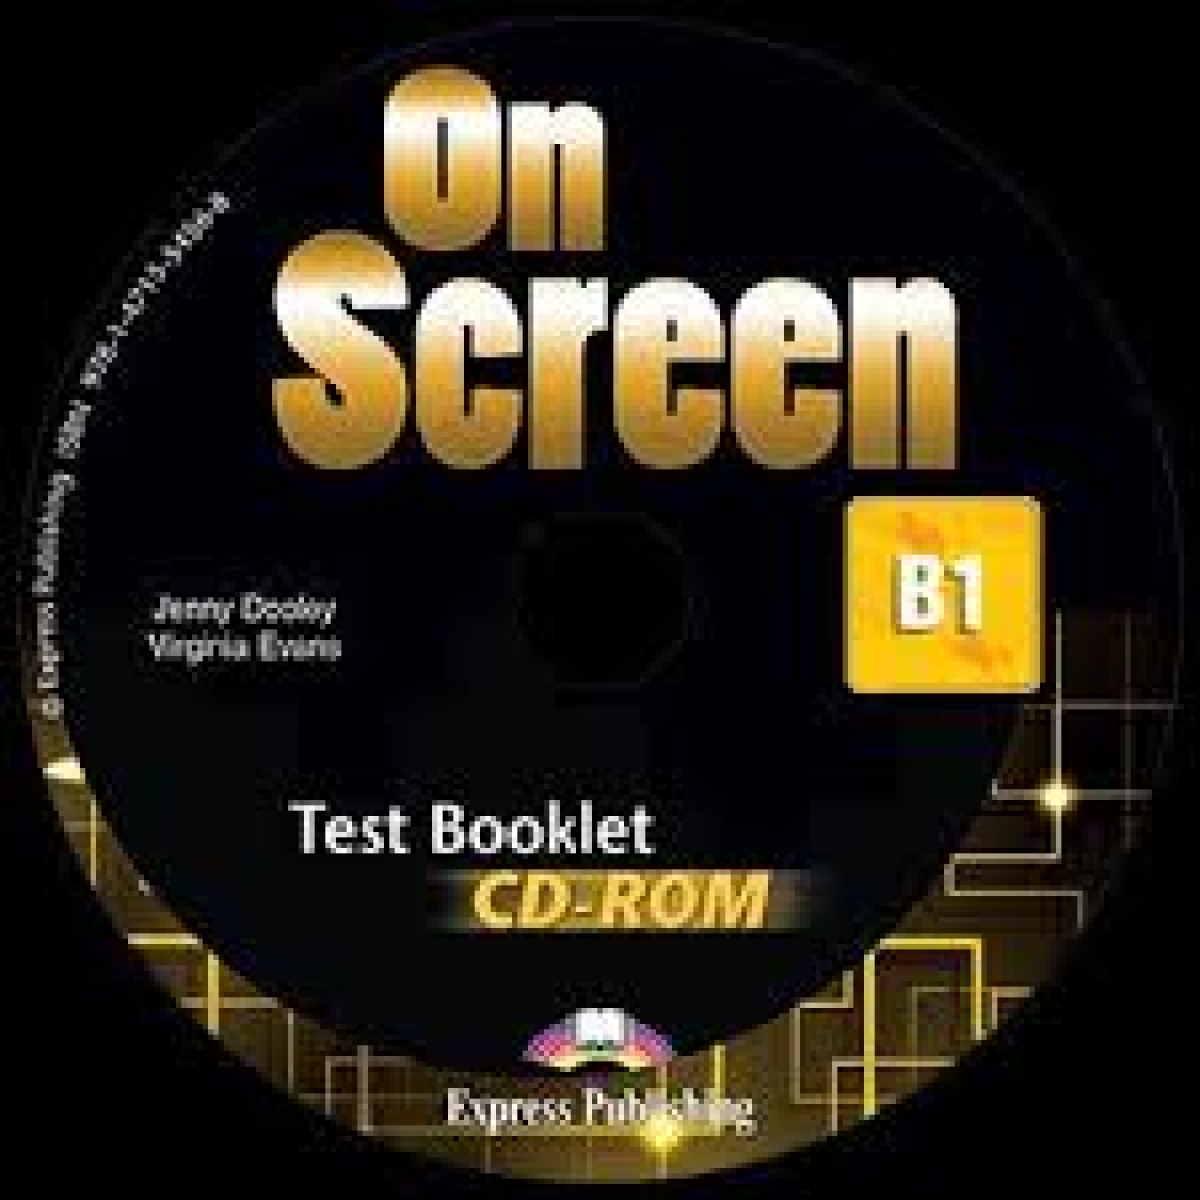 Evans Virginia, Dooley Jenny CD-ROM. On Screen B1. Test Booklet 